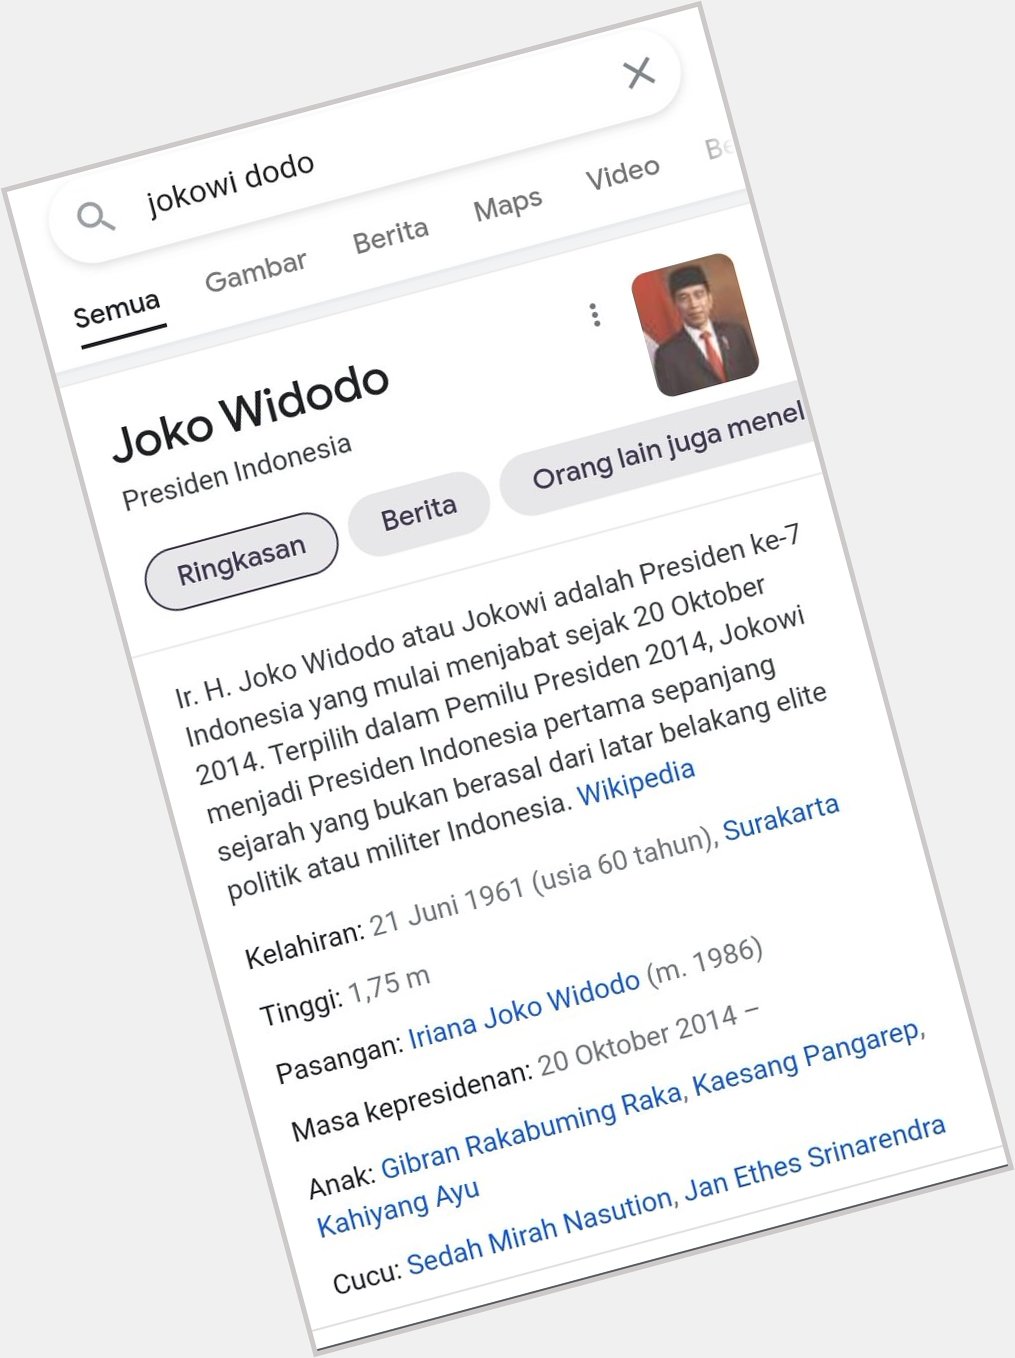 Happy birthday President RI of Indonesia Mr. Joko widodo      